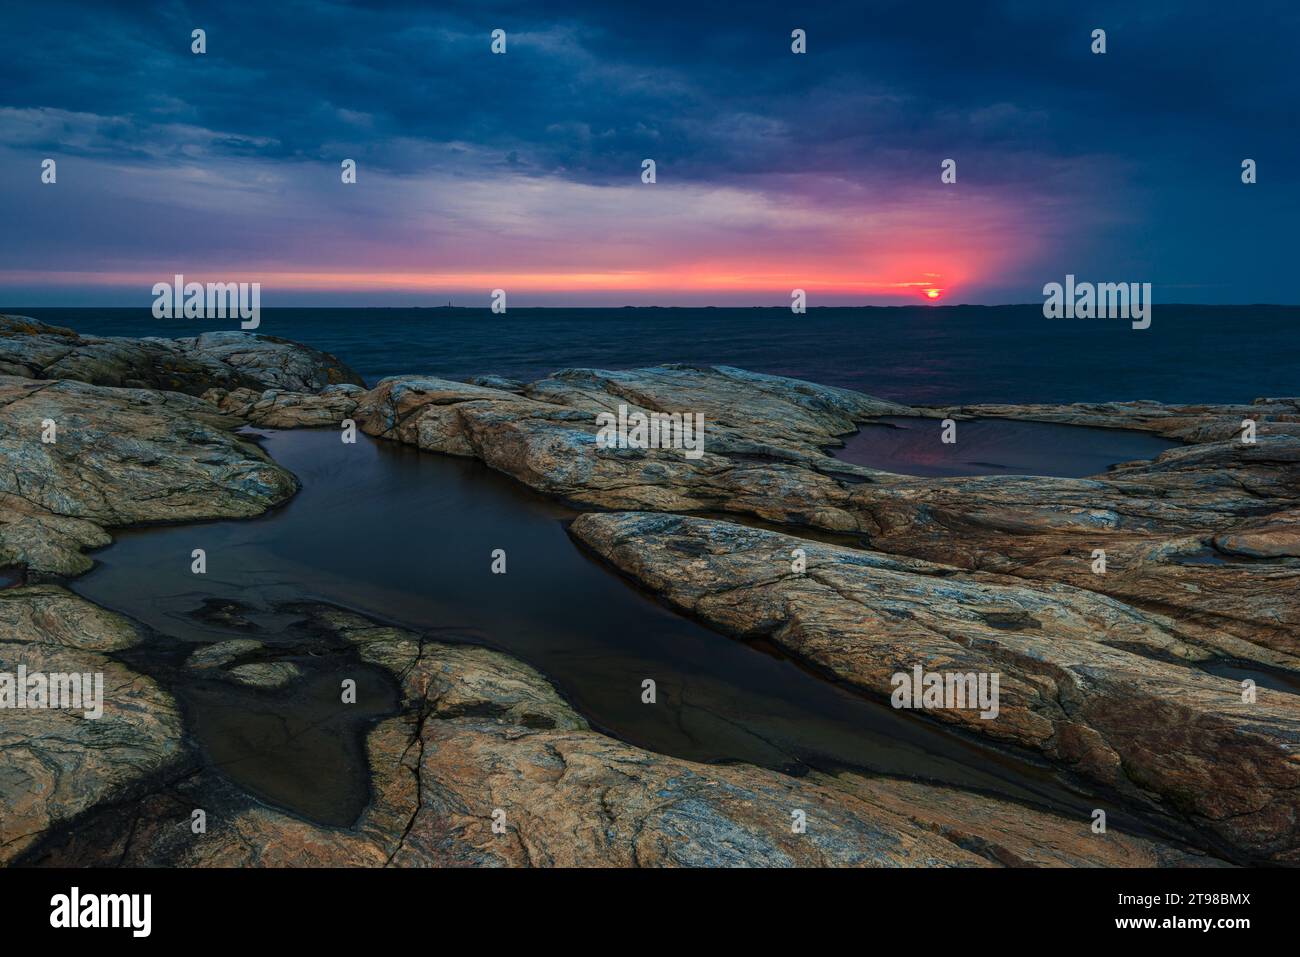 Beautiful sunset over the rocky shore of the Swedish coast. Stock Photo